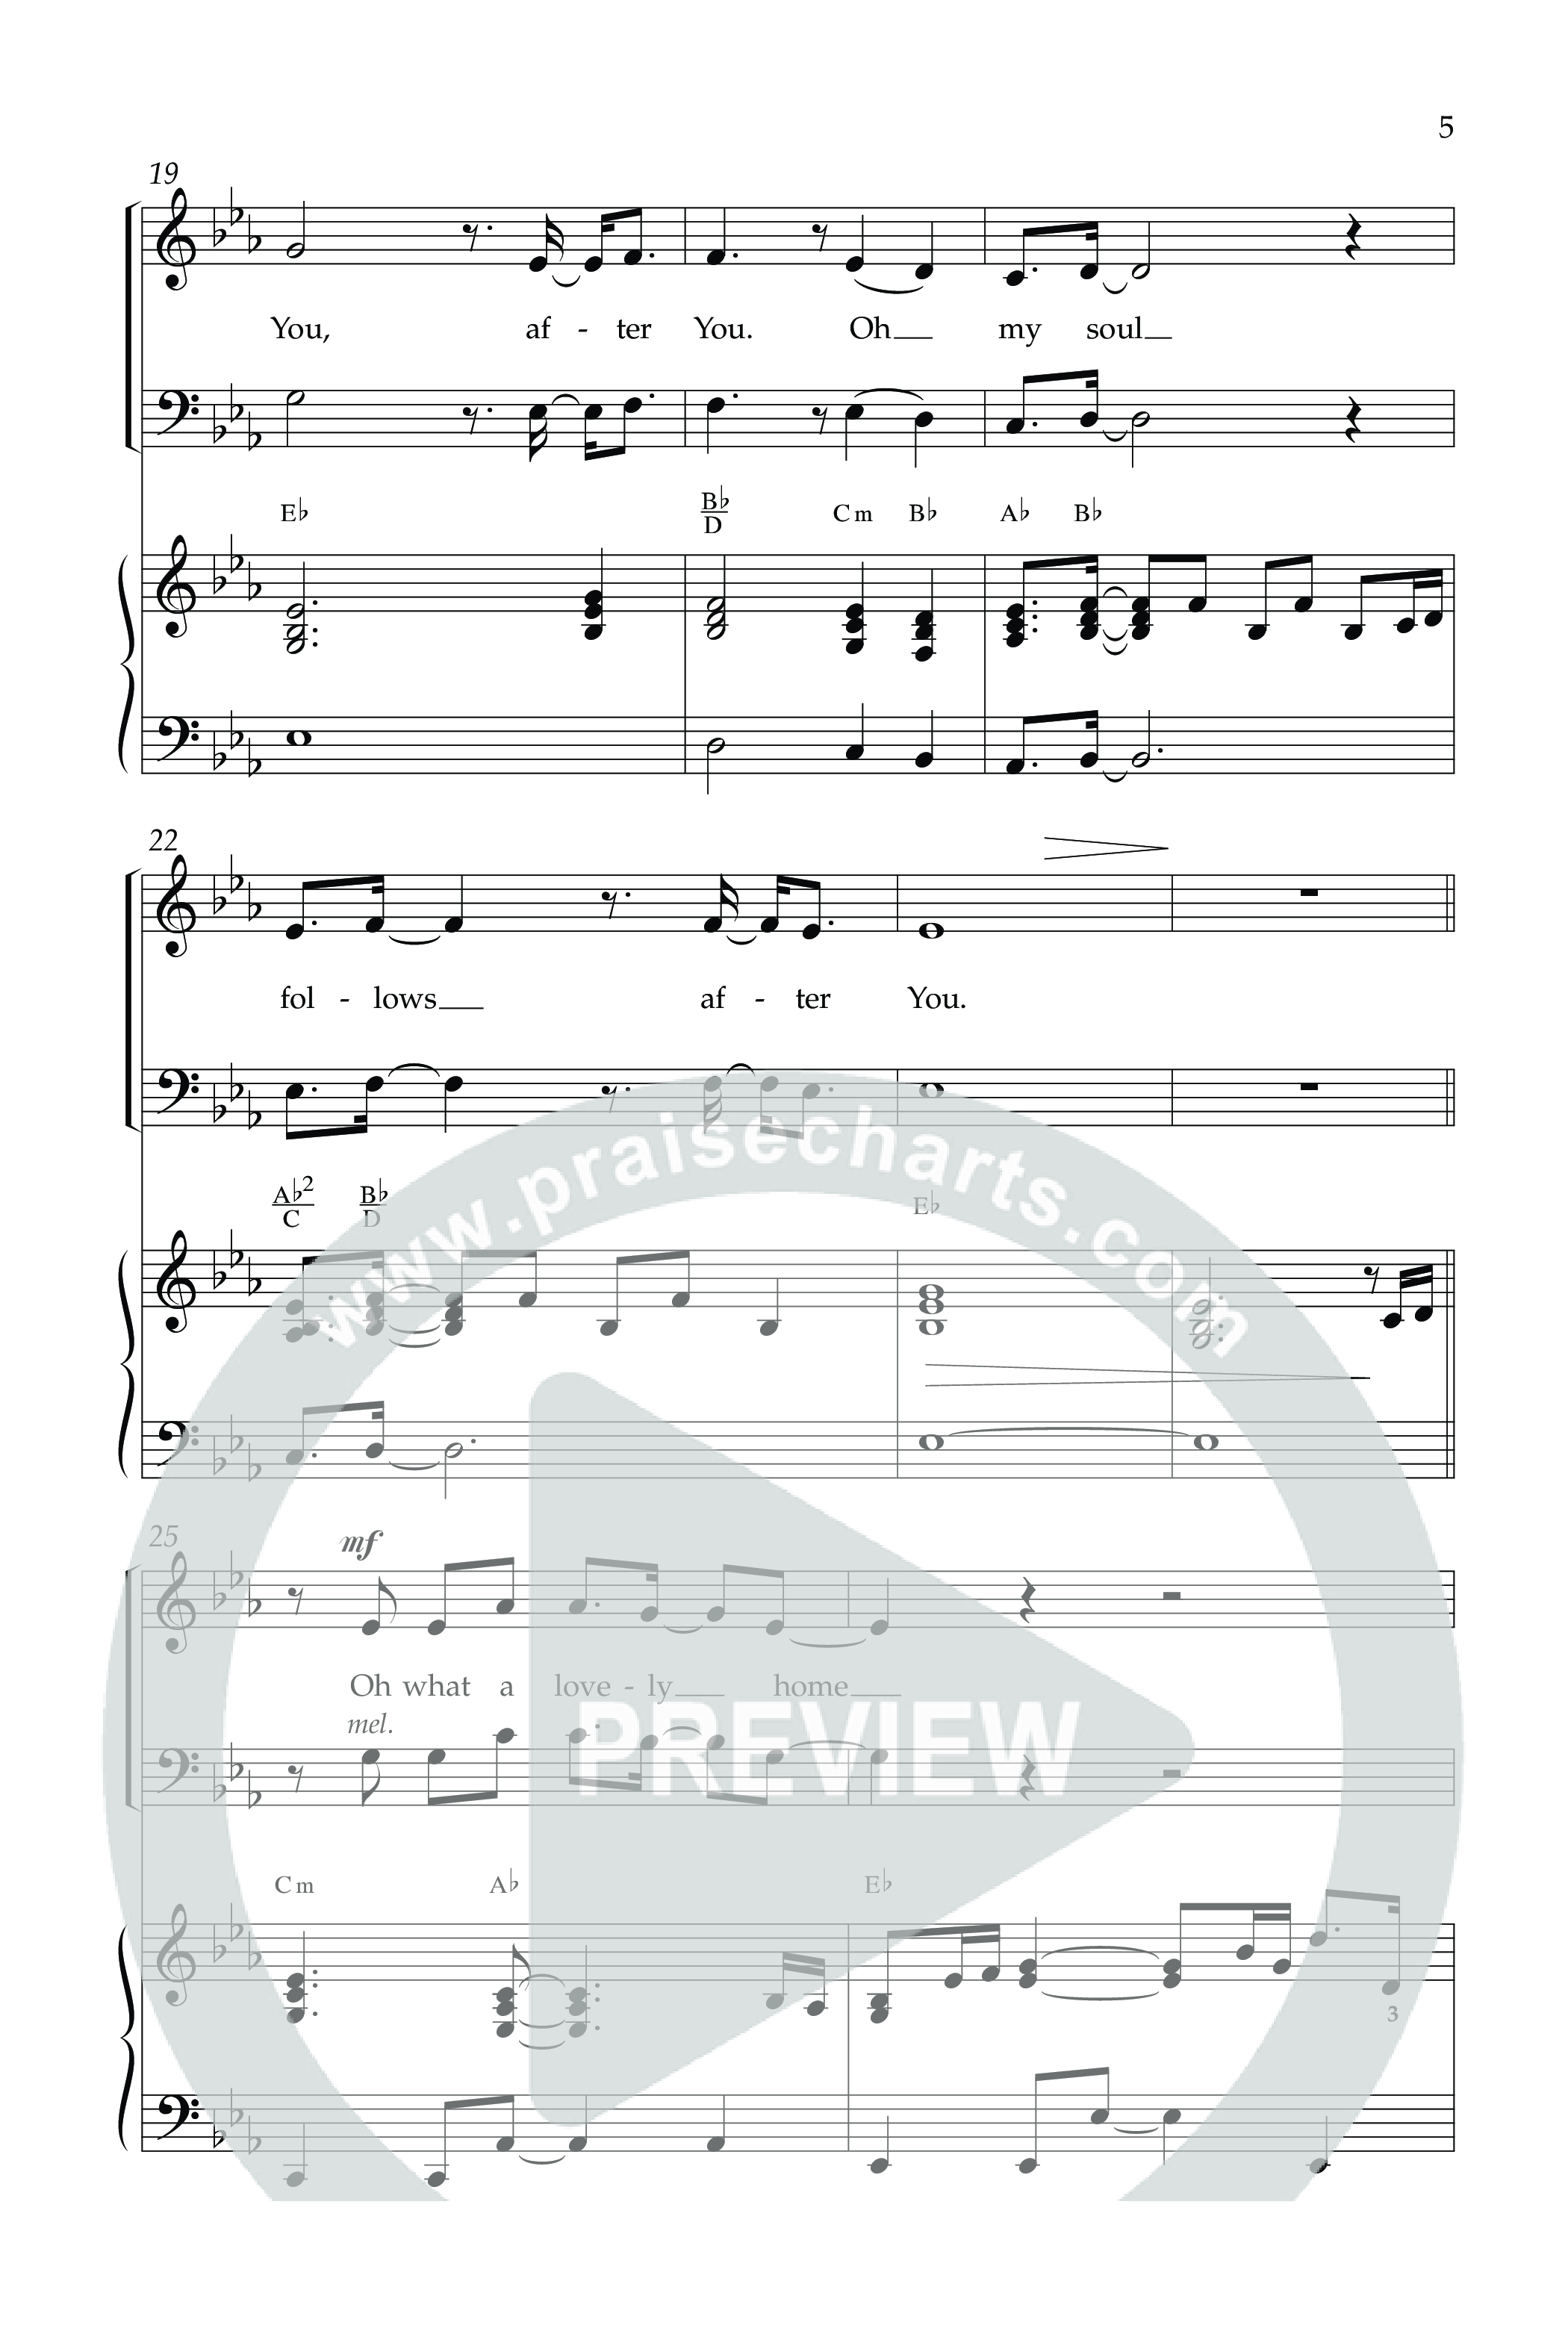 My Soul Follows (Choral Anthem SATB) Anthem (SATB/Piano) (Lifeway Choral / Arr. Nick Robertson)